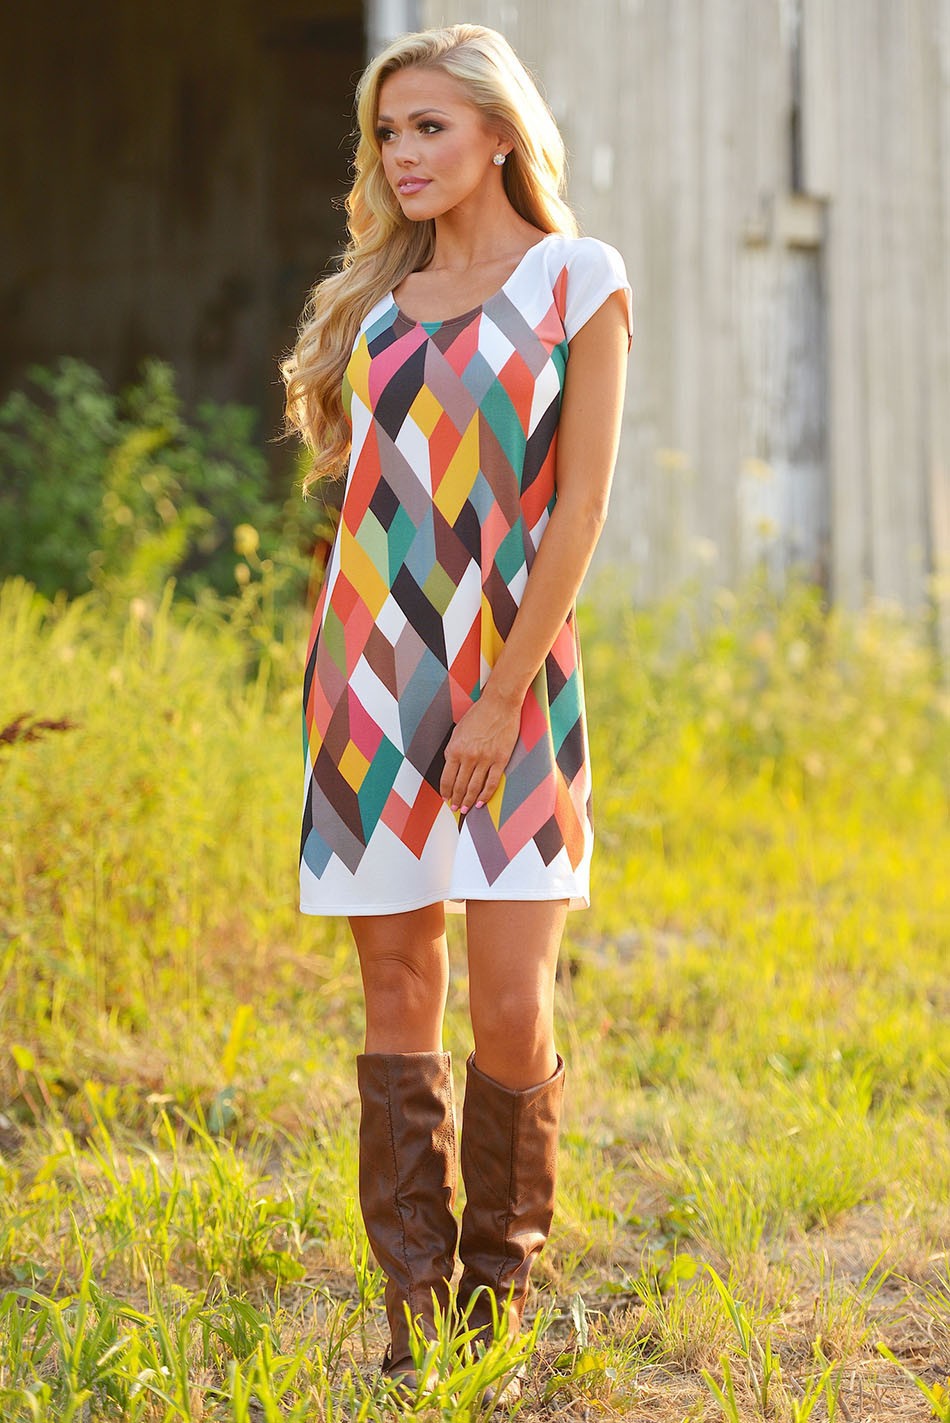 Rainbow Colored Short Sleeve Dress